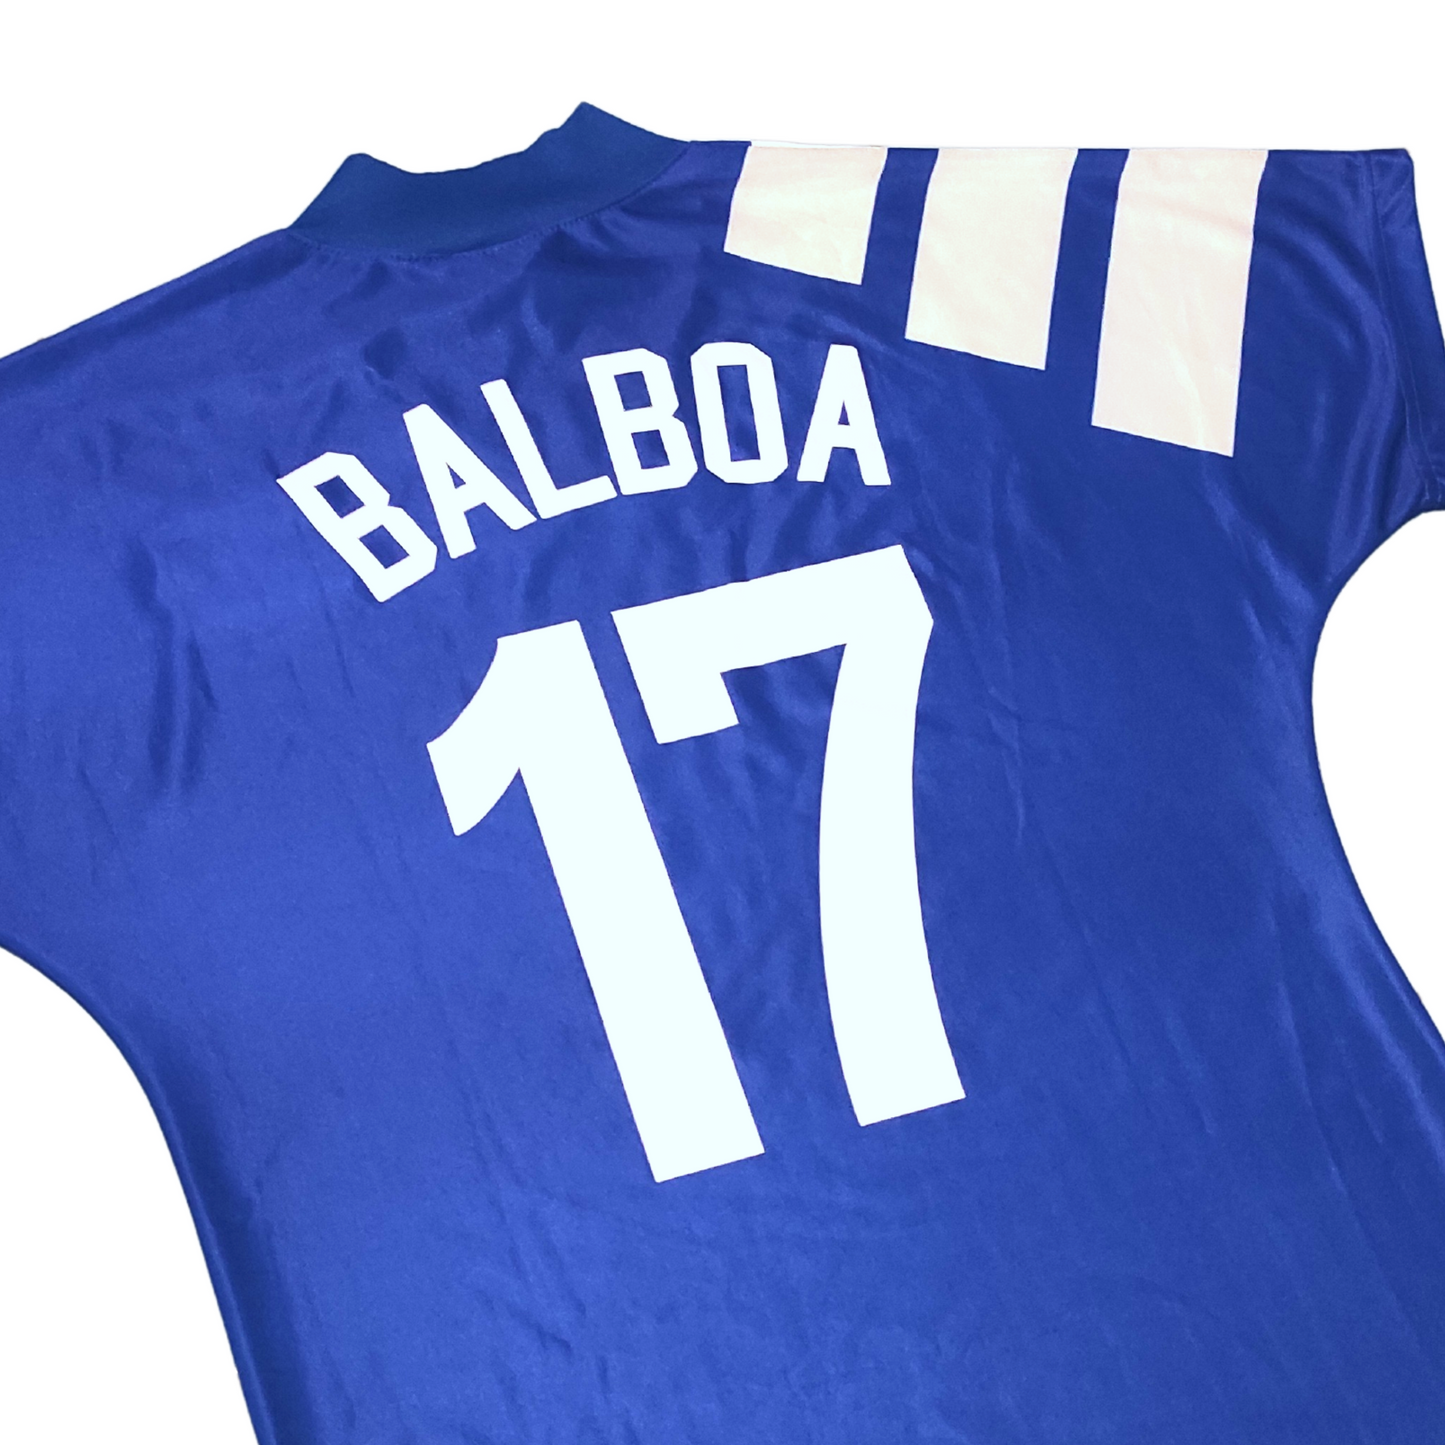 USA Away Shirt 1992-1994 Balboa (M)